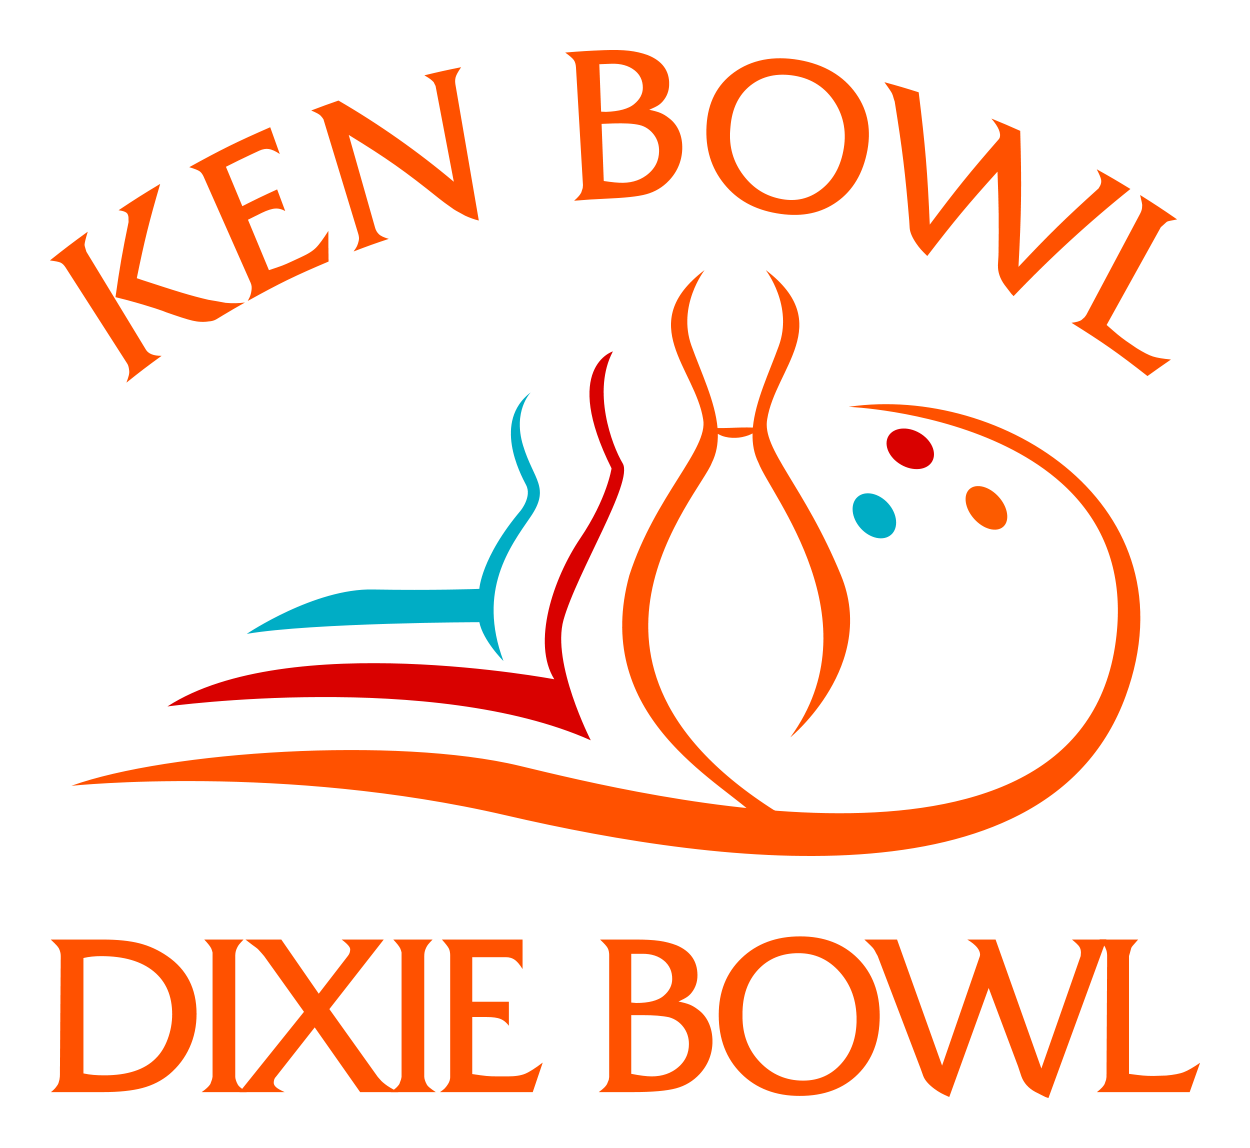 Dixie Bowl and Ken Bowl